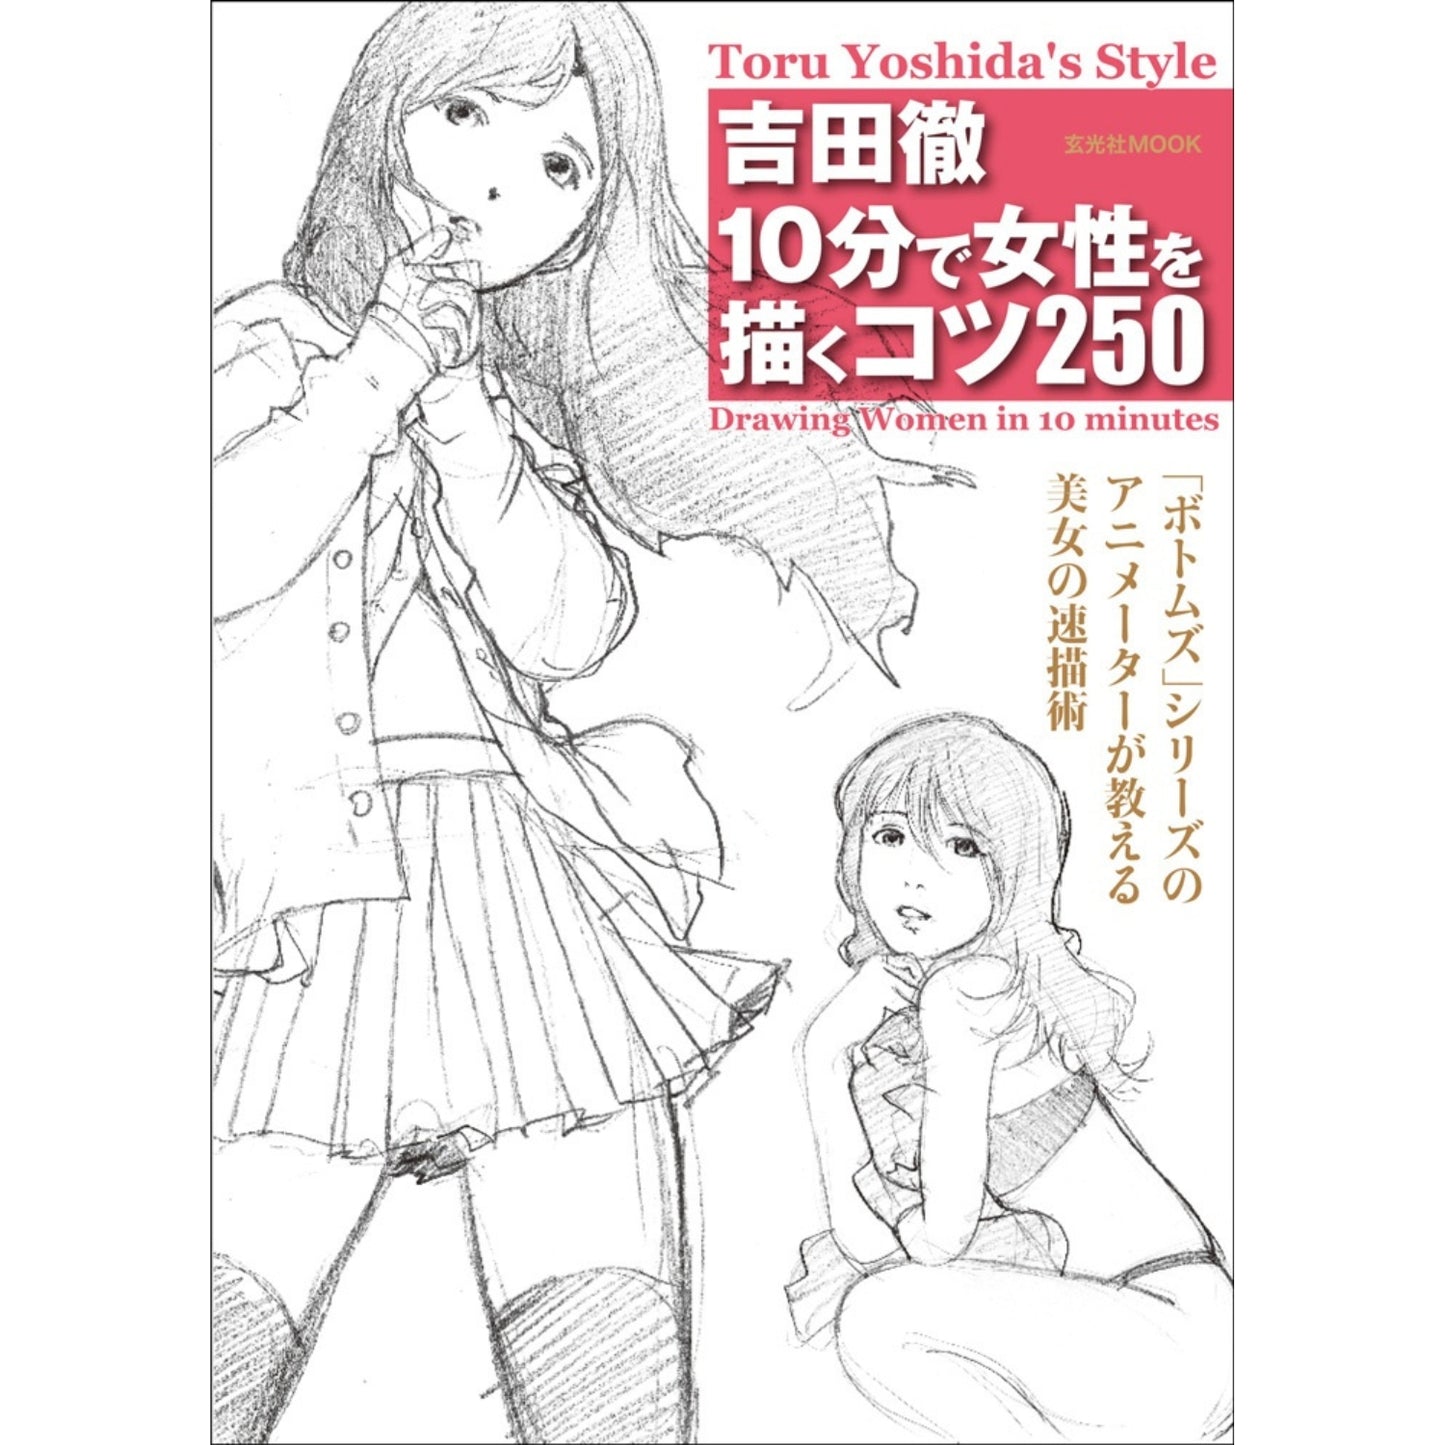 How to draw - jap. Zeichenbuch - Toru Yoshida: 250 Tips on How to Draw Women in 10 Minutes